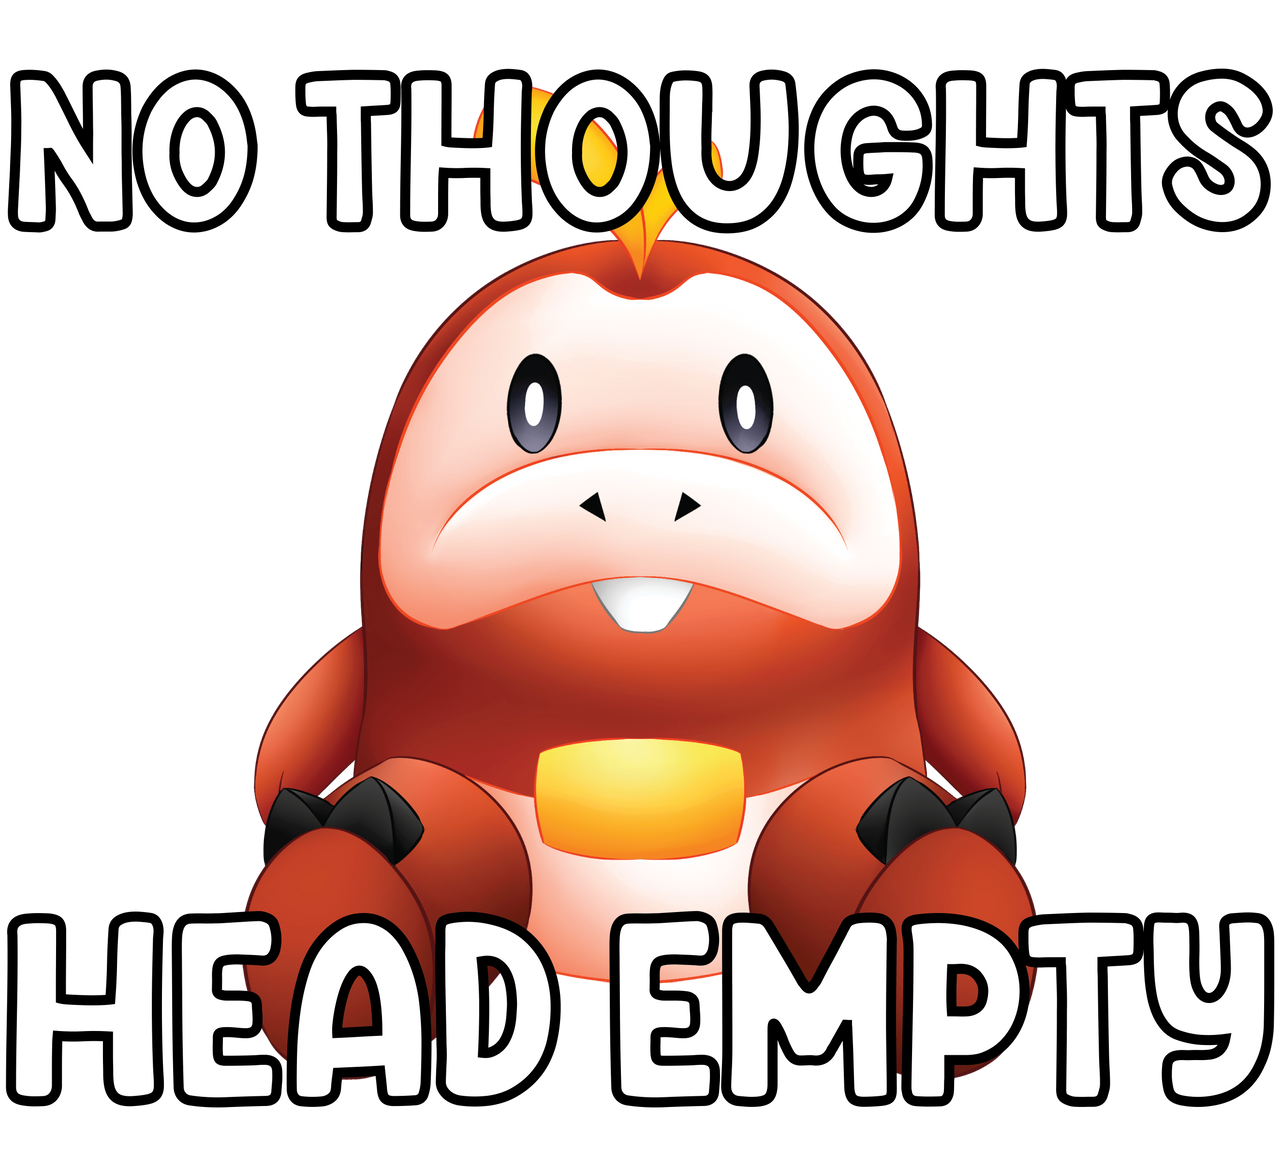 Pokemon, No Thoughts Head Empty